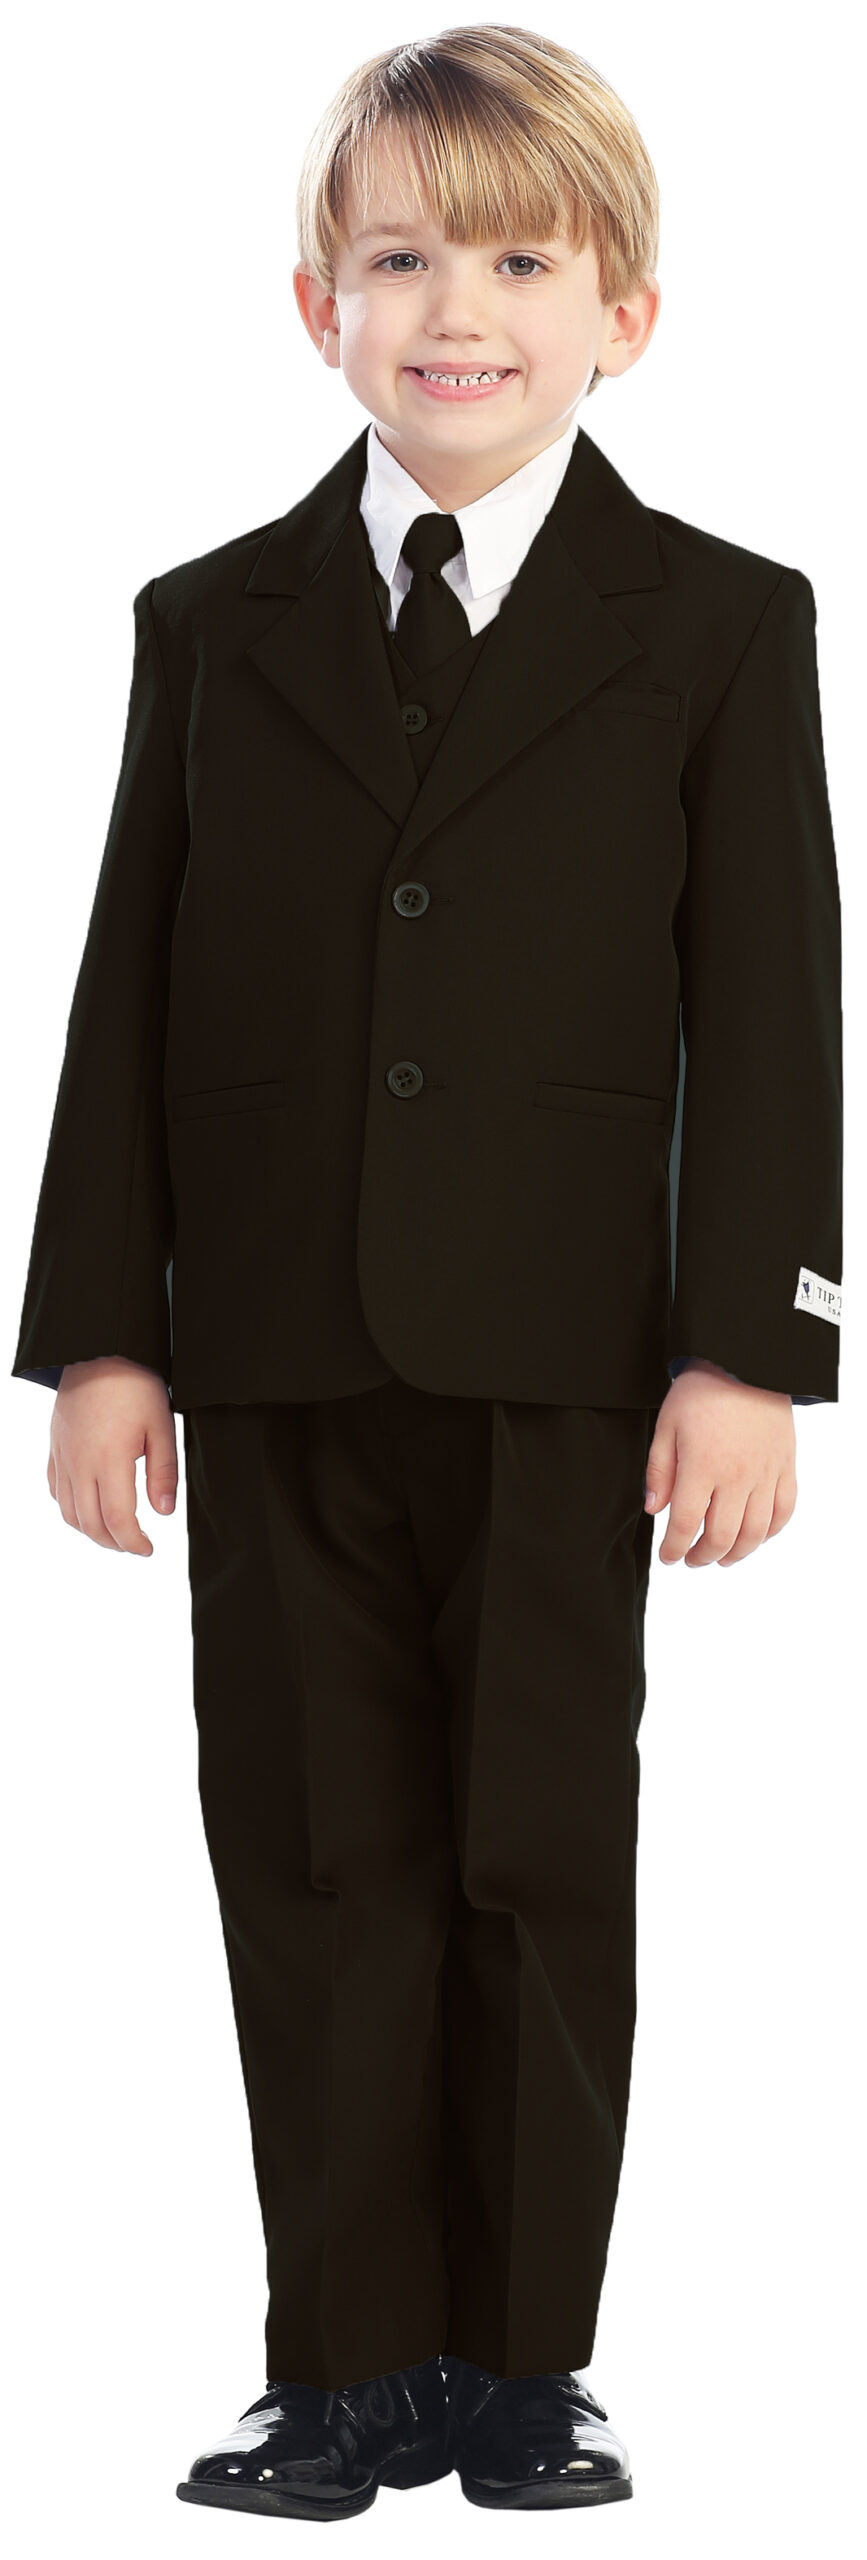 Avery Hill 5-Piece Boy's 2-Button Dress Suit Full-Back Vest - Brown Size 3